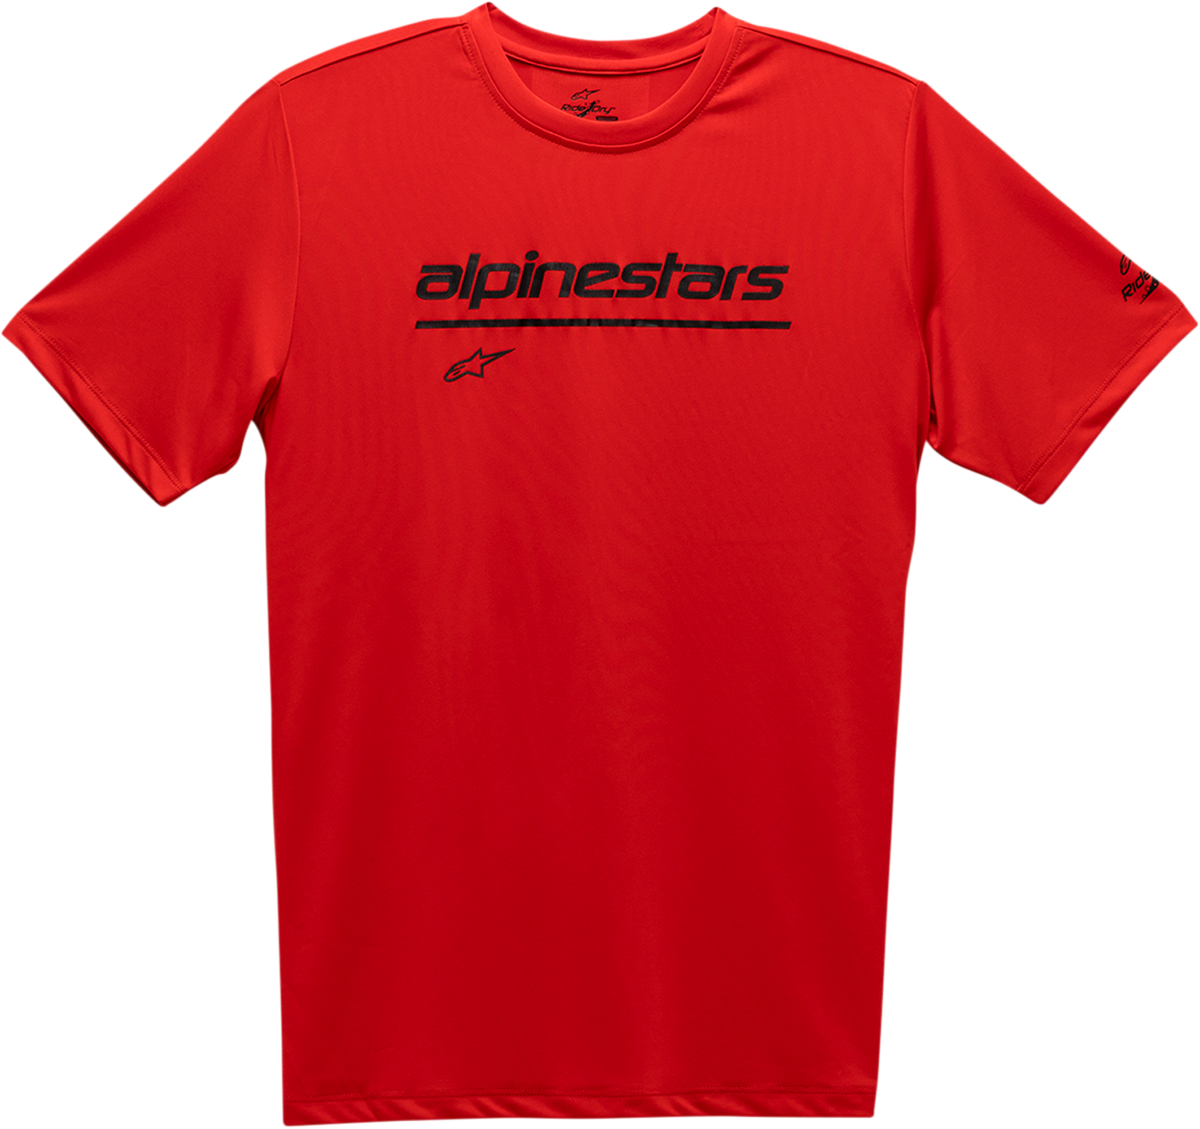 ALPINESTARS Tech Line Up Performance T-Shirt - Red - Large 12117380030L